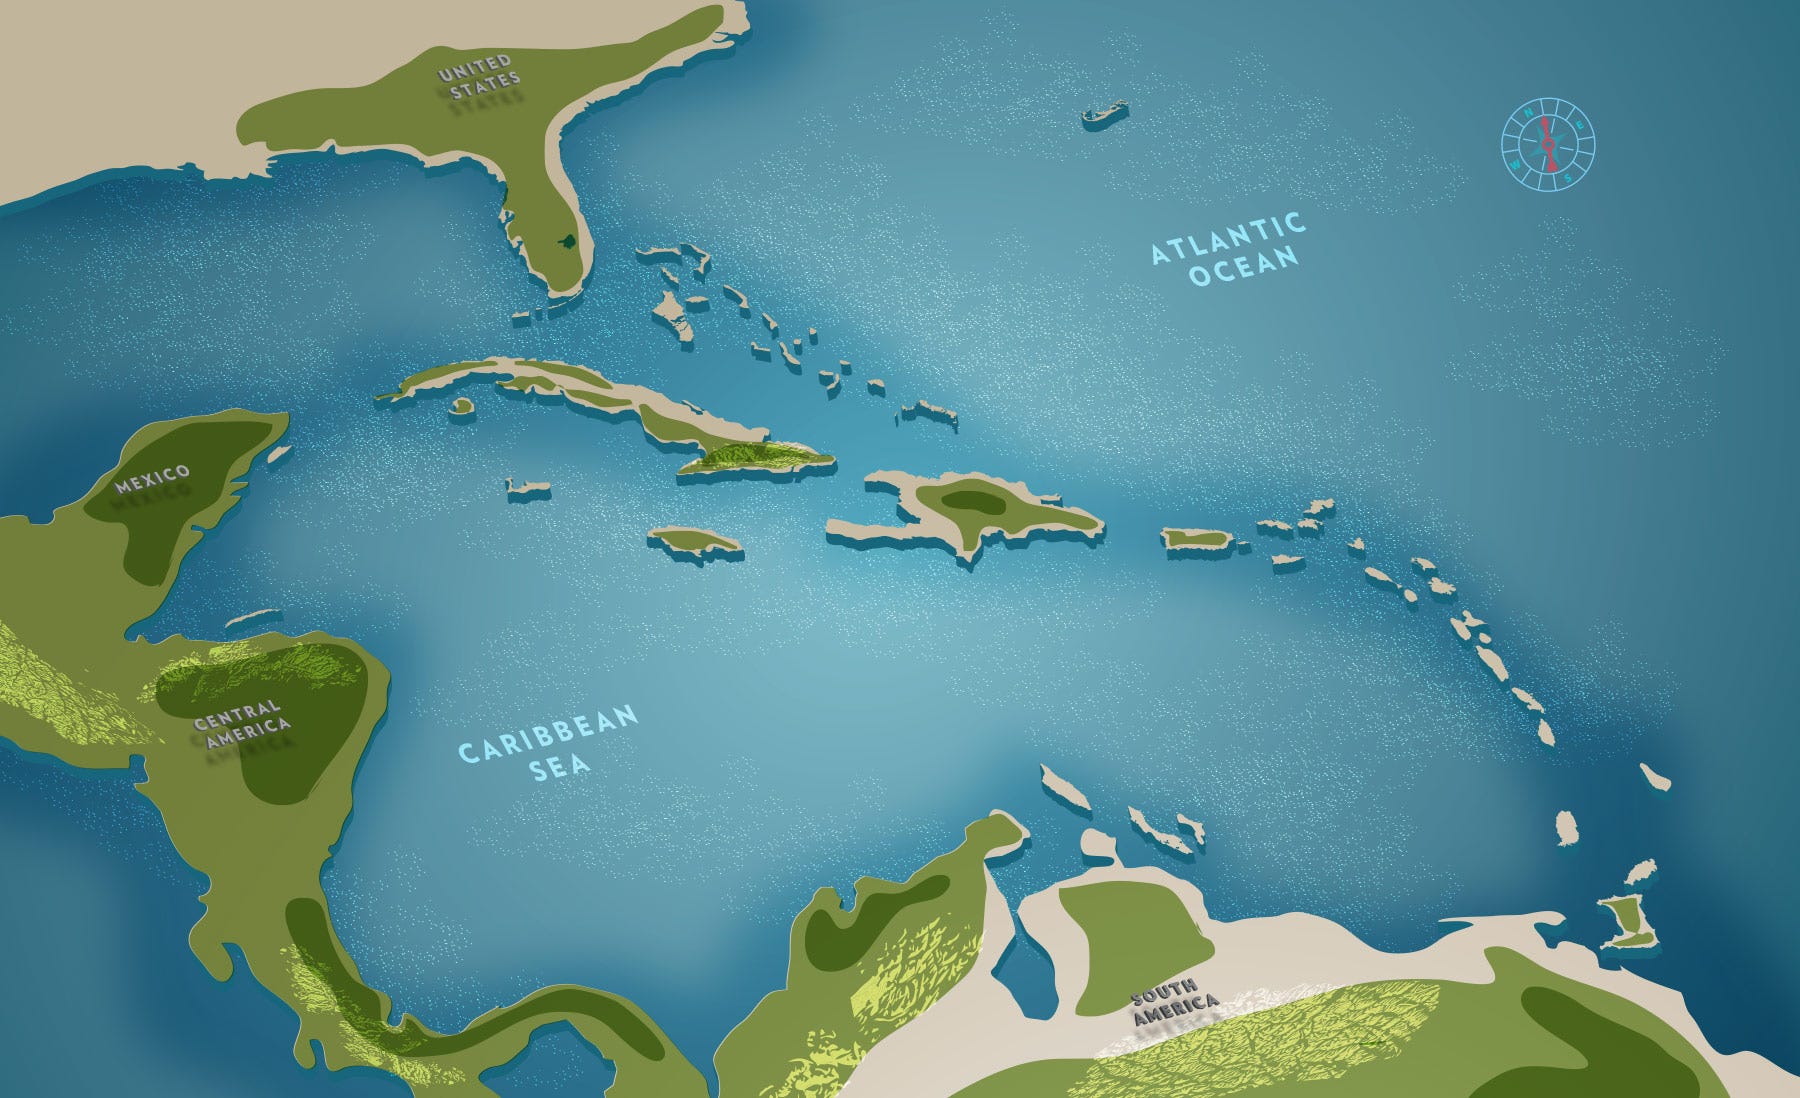 More world types. Острова Карибского моря на карте. Границы Карибского моря на карте.